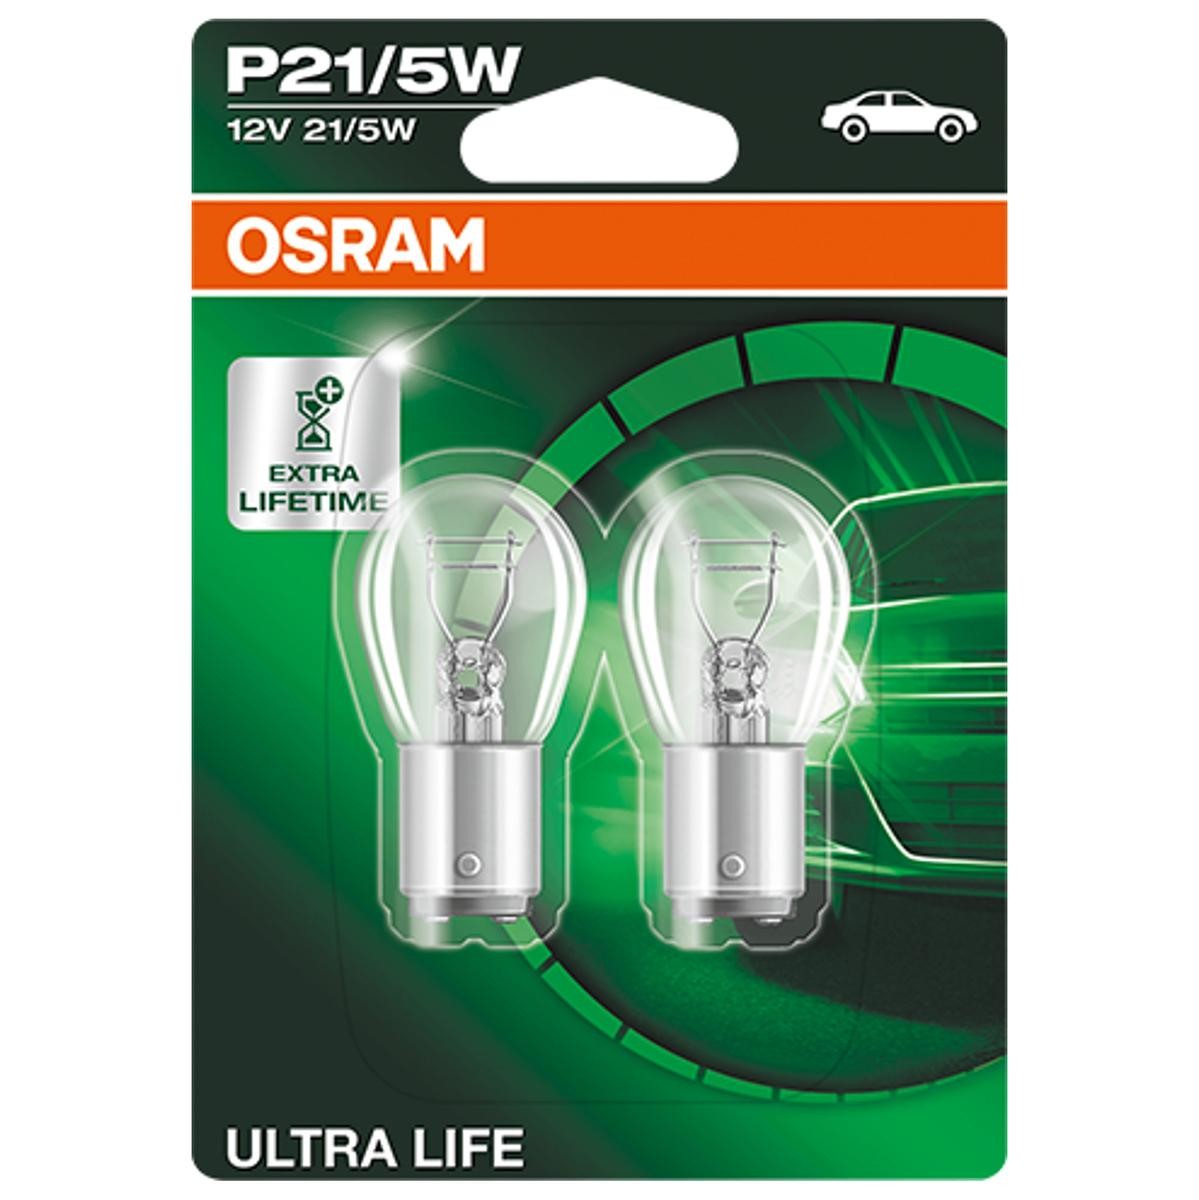 P21/5W OSRAM ULTRA LIFE 7528ULT-02B Blinkerbirne 12V 21/5W, P21/5W ▷  AUTODOC Preis und Erfahrung